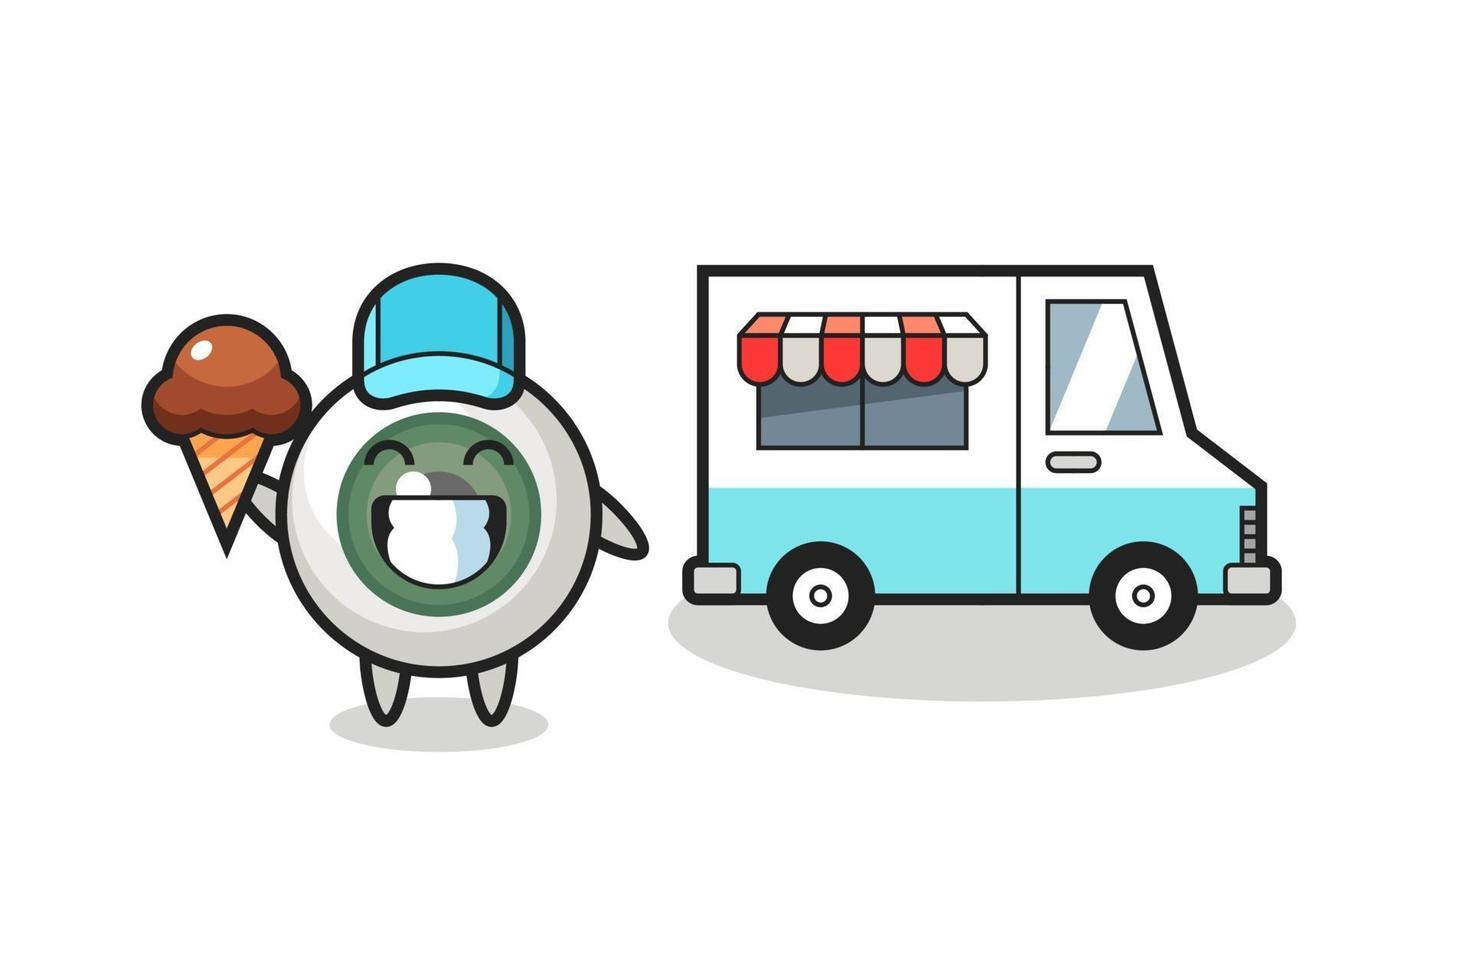 Mascot cartoon of eyeball with ice cream truck vector